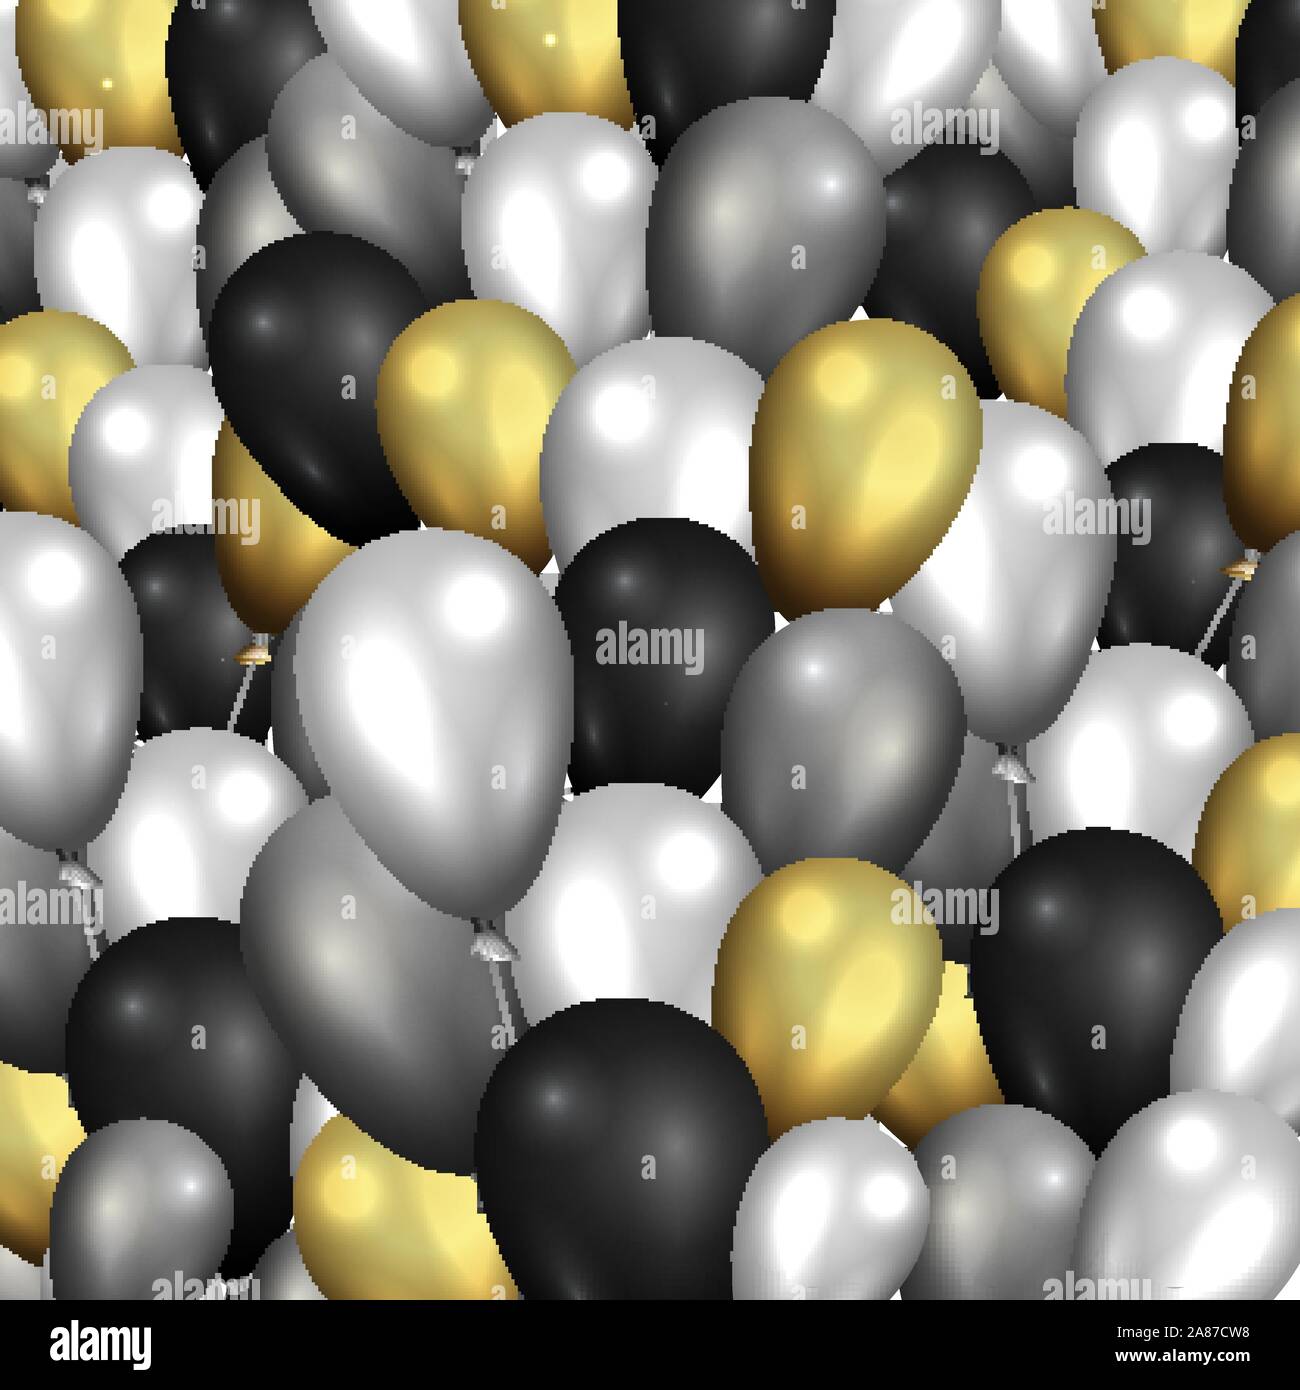 Negro dorado de helio y globos plateados de trama de fondo para